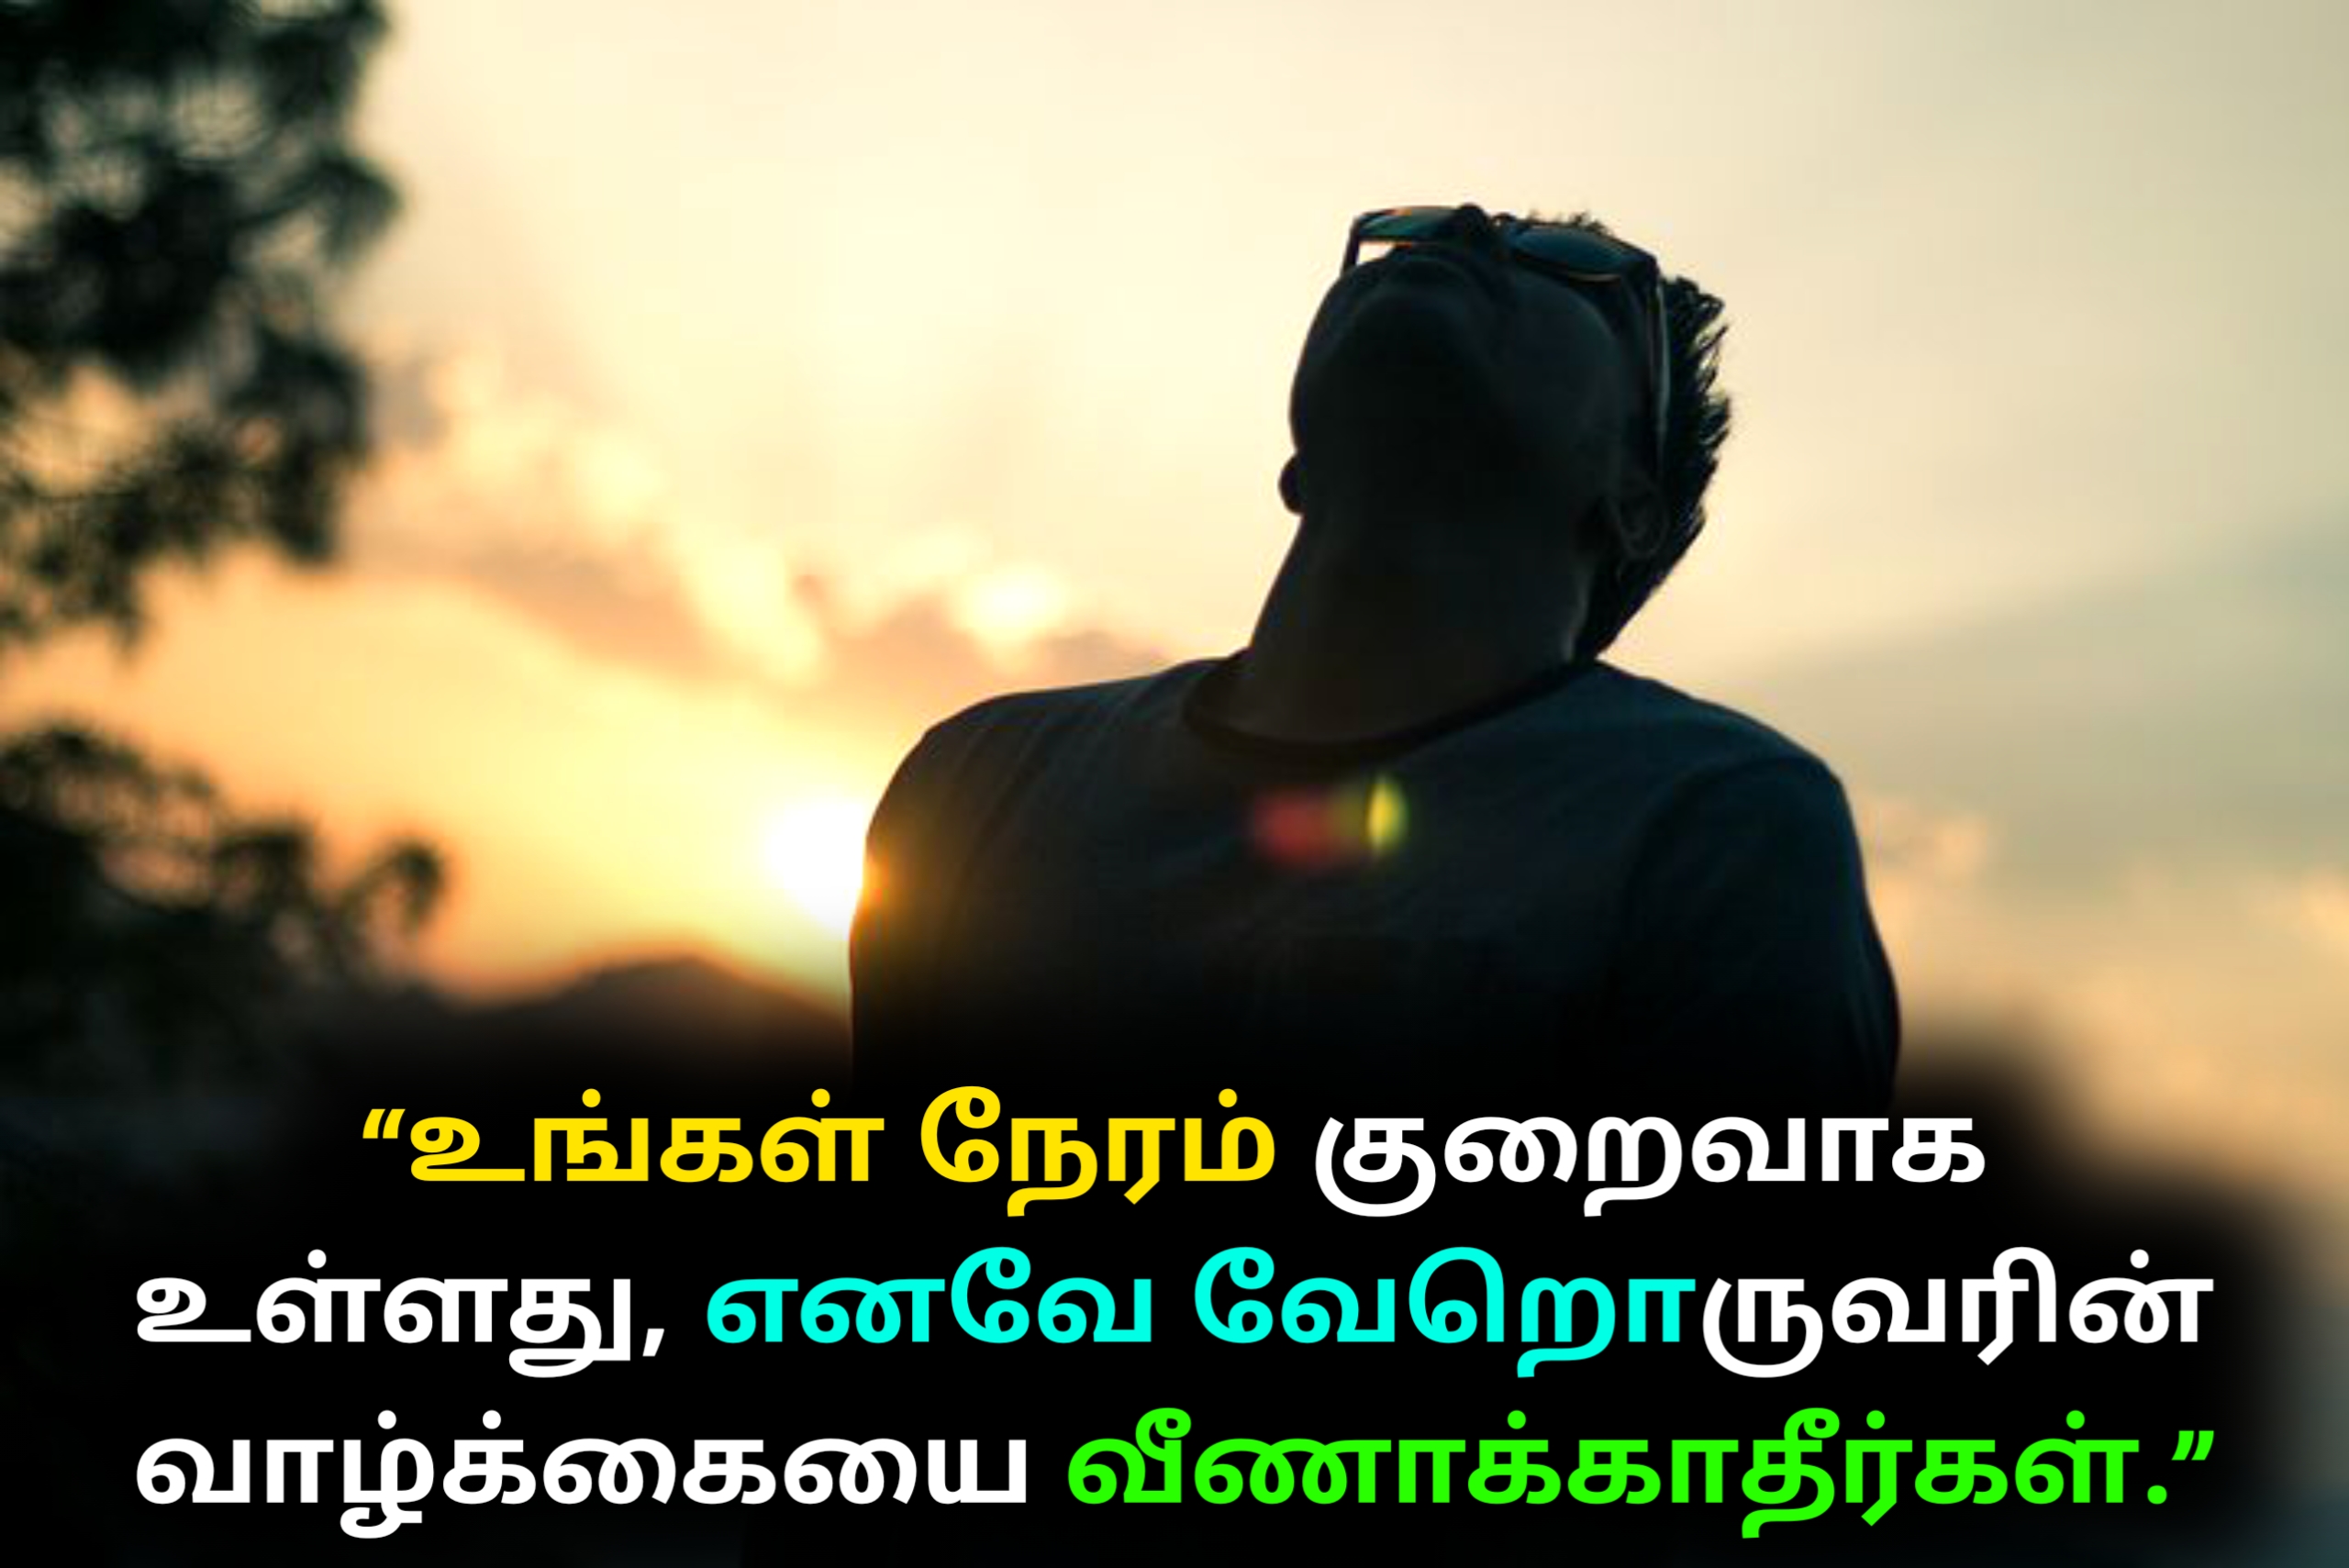 Motivational quotes in Tamil | मोटिवेशनल कोट्स इन तमिल,positivity motivational quotes in tamil,success motivational quotes in tamil,self confidence positivity motivational quotes in tamil,life motivational quotes in tamil